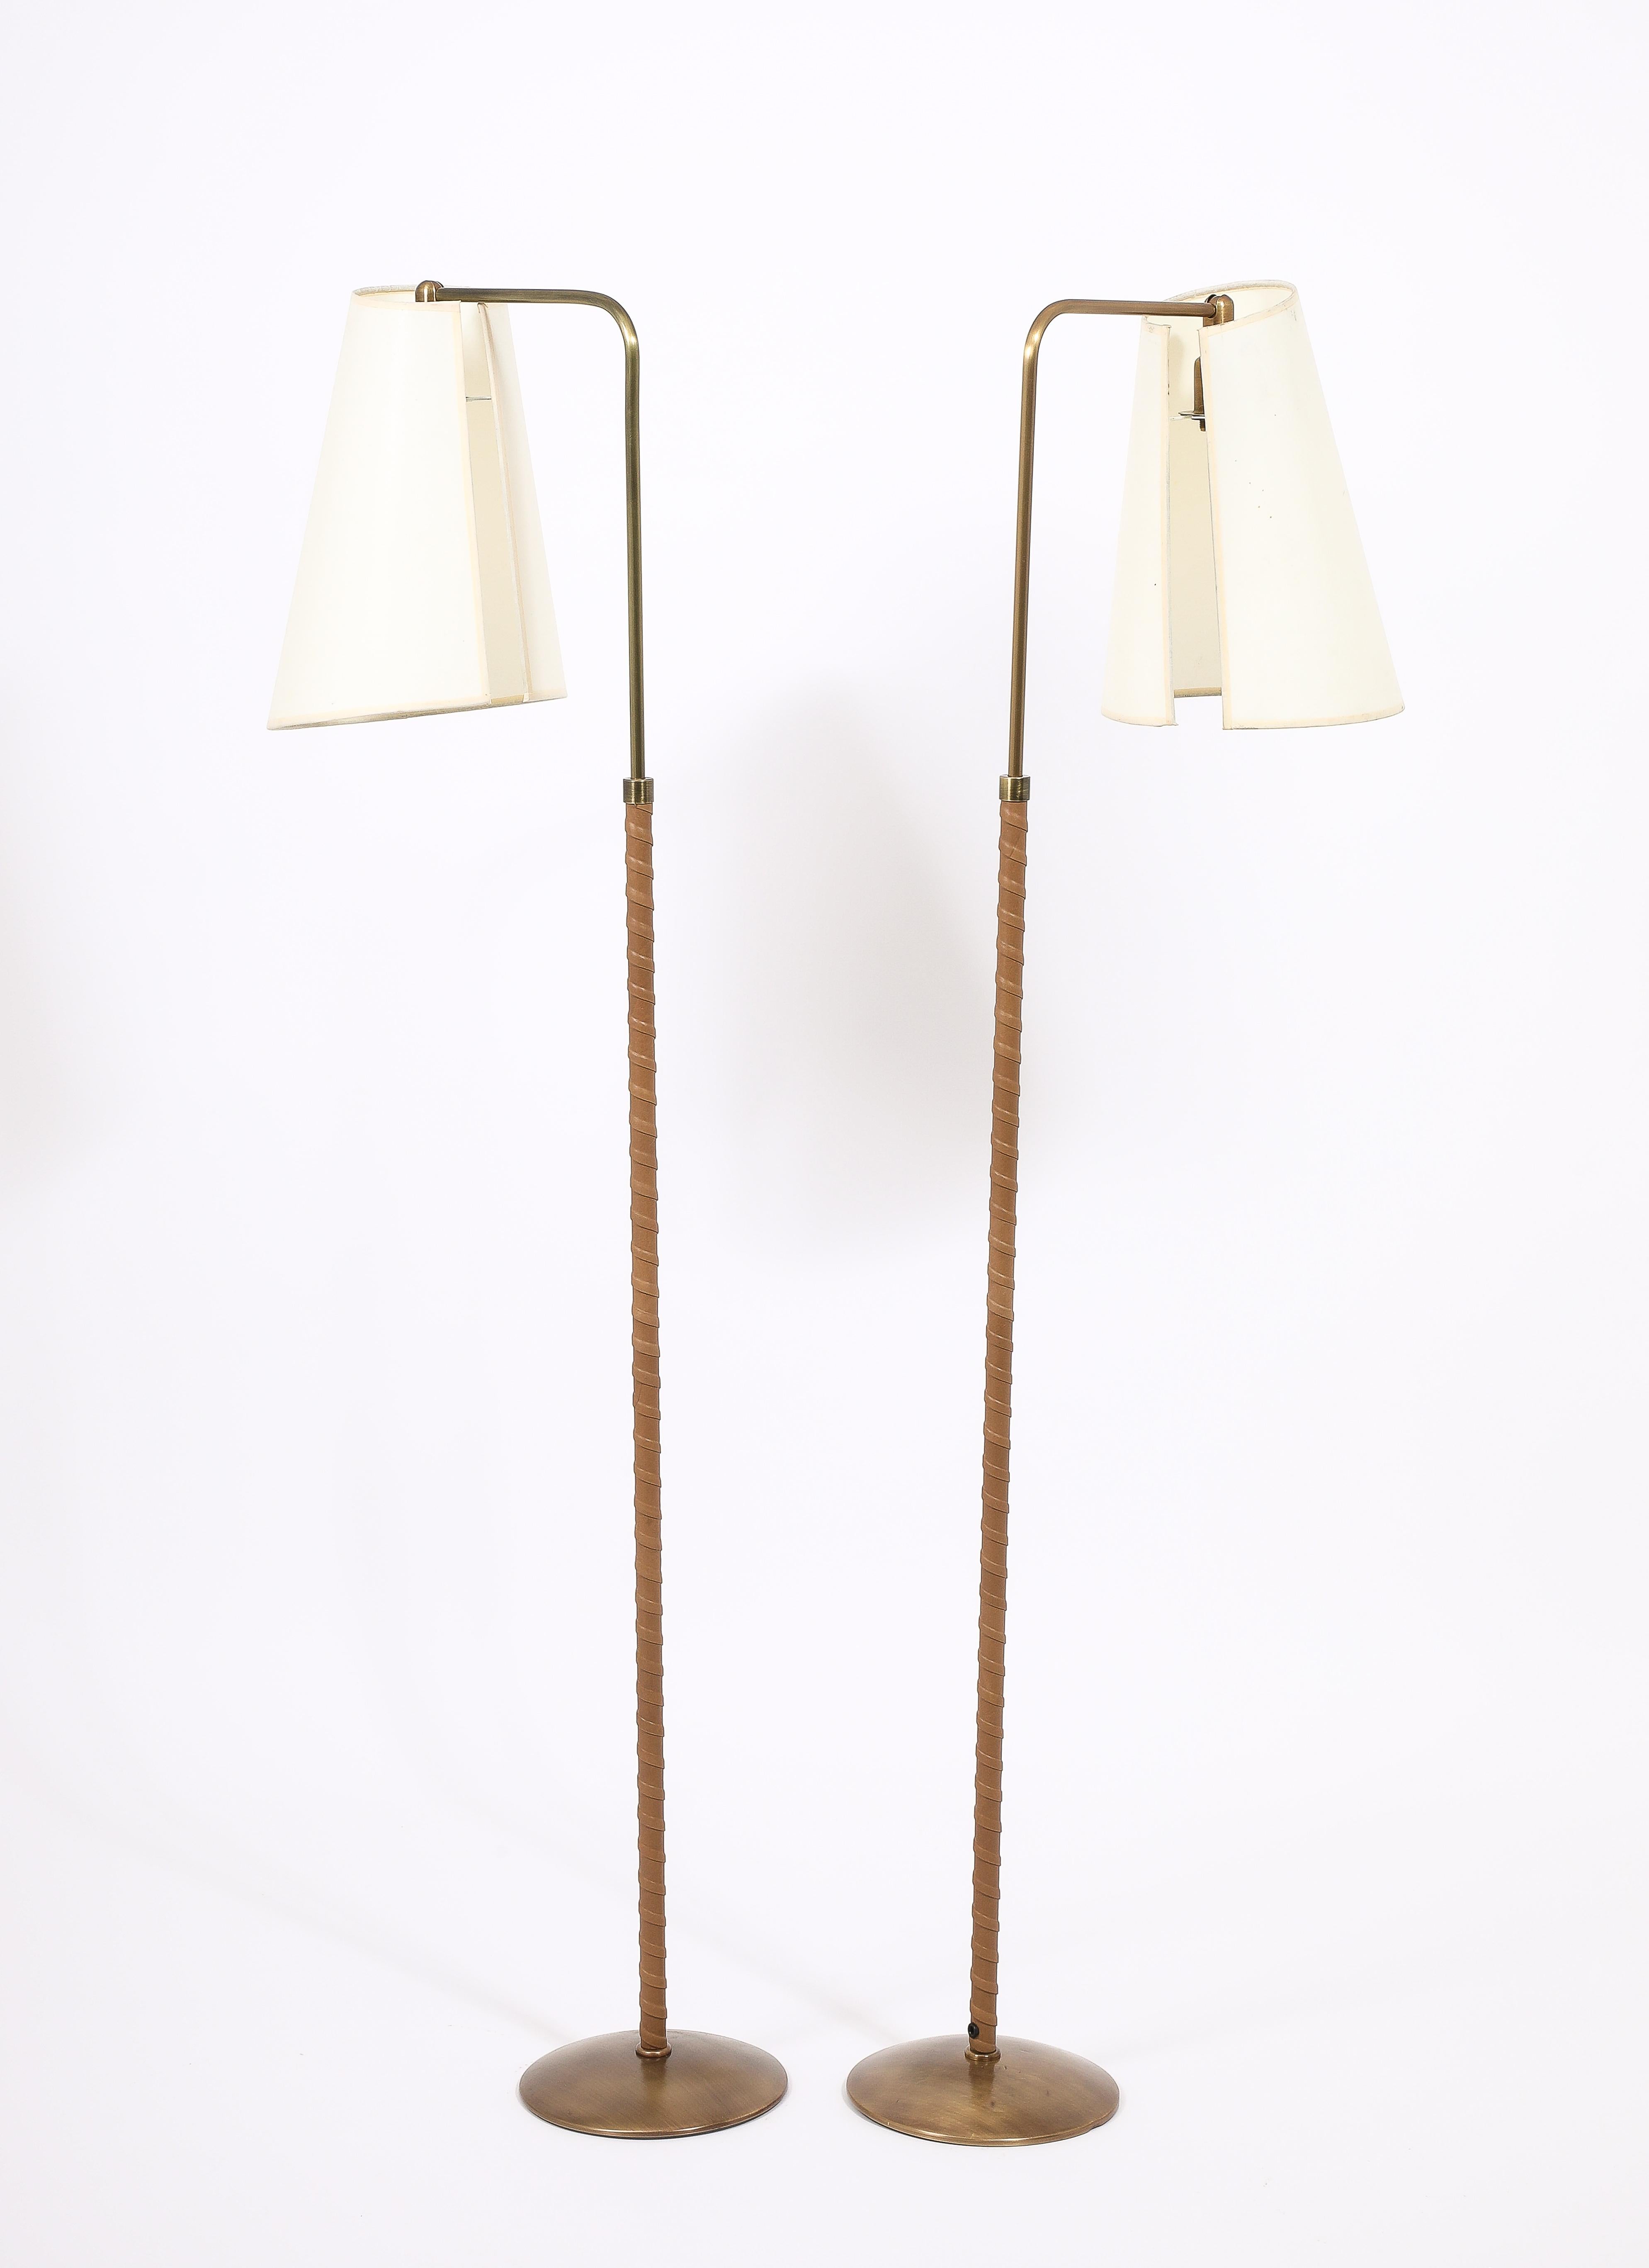 Brass & Tan Leather Metalarte Floor Lamps, Spain 1960's For Sale 3